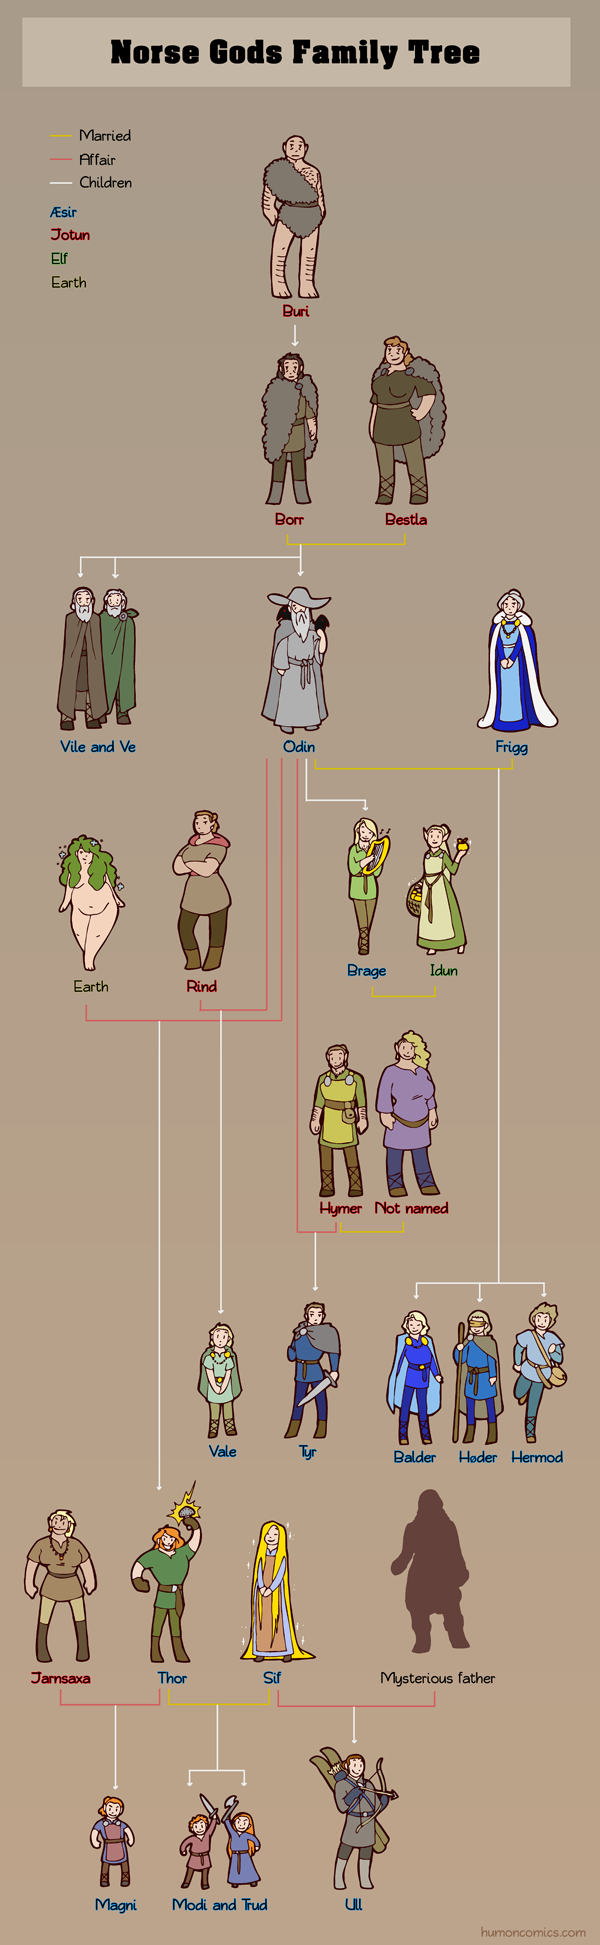 Norse Gods Family tree HumonComics.com